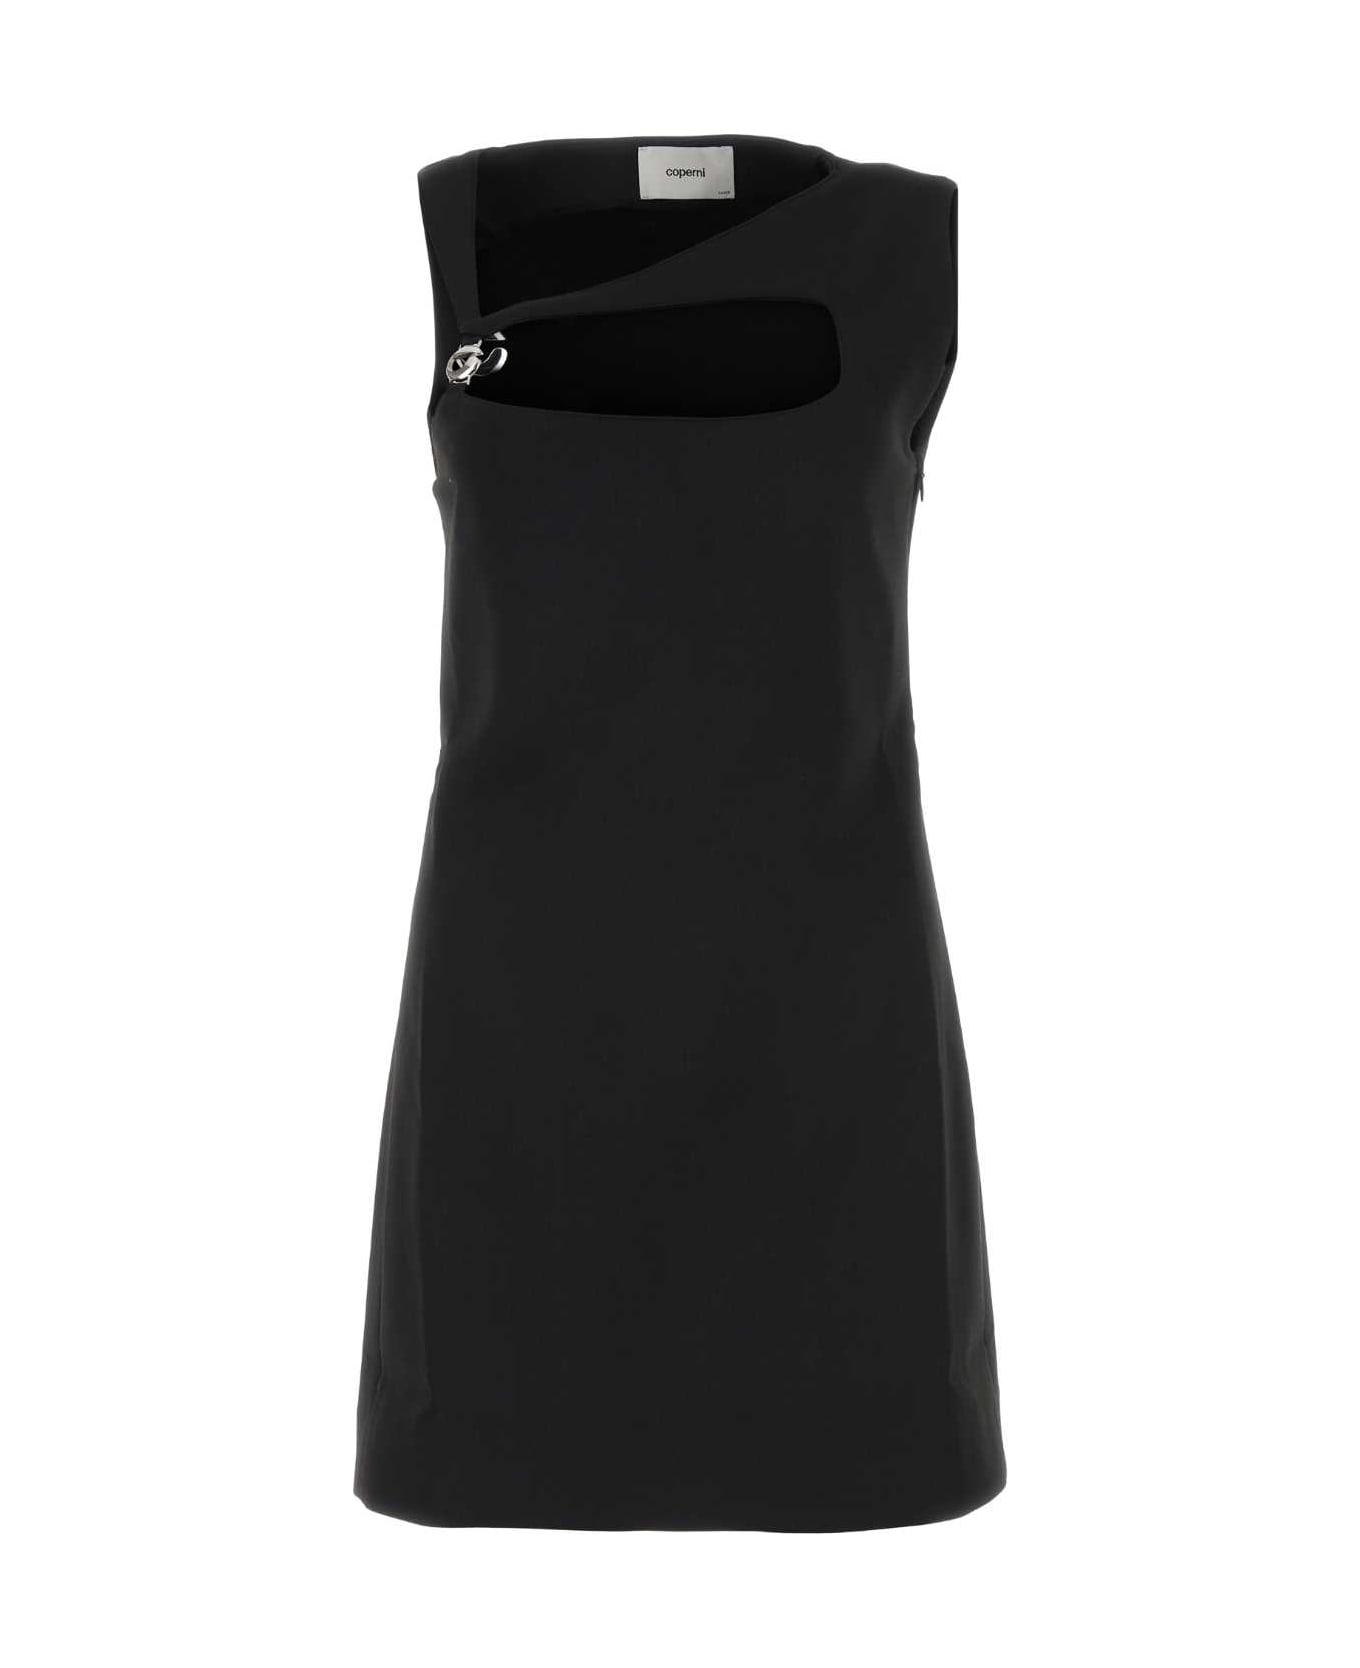 Coperni Black Stretch Jersey Fitted Dress - BLACK